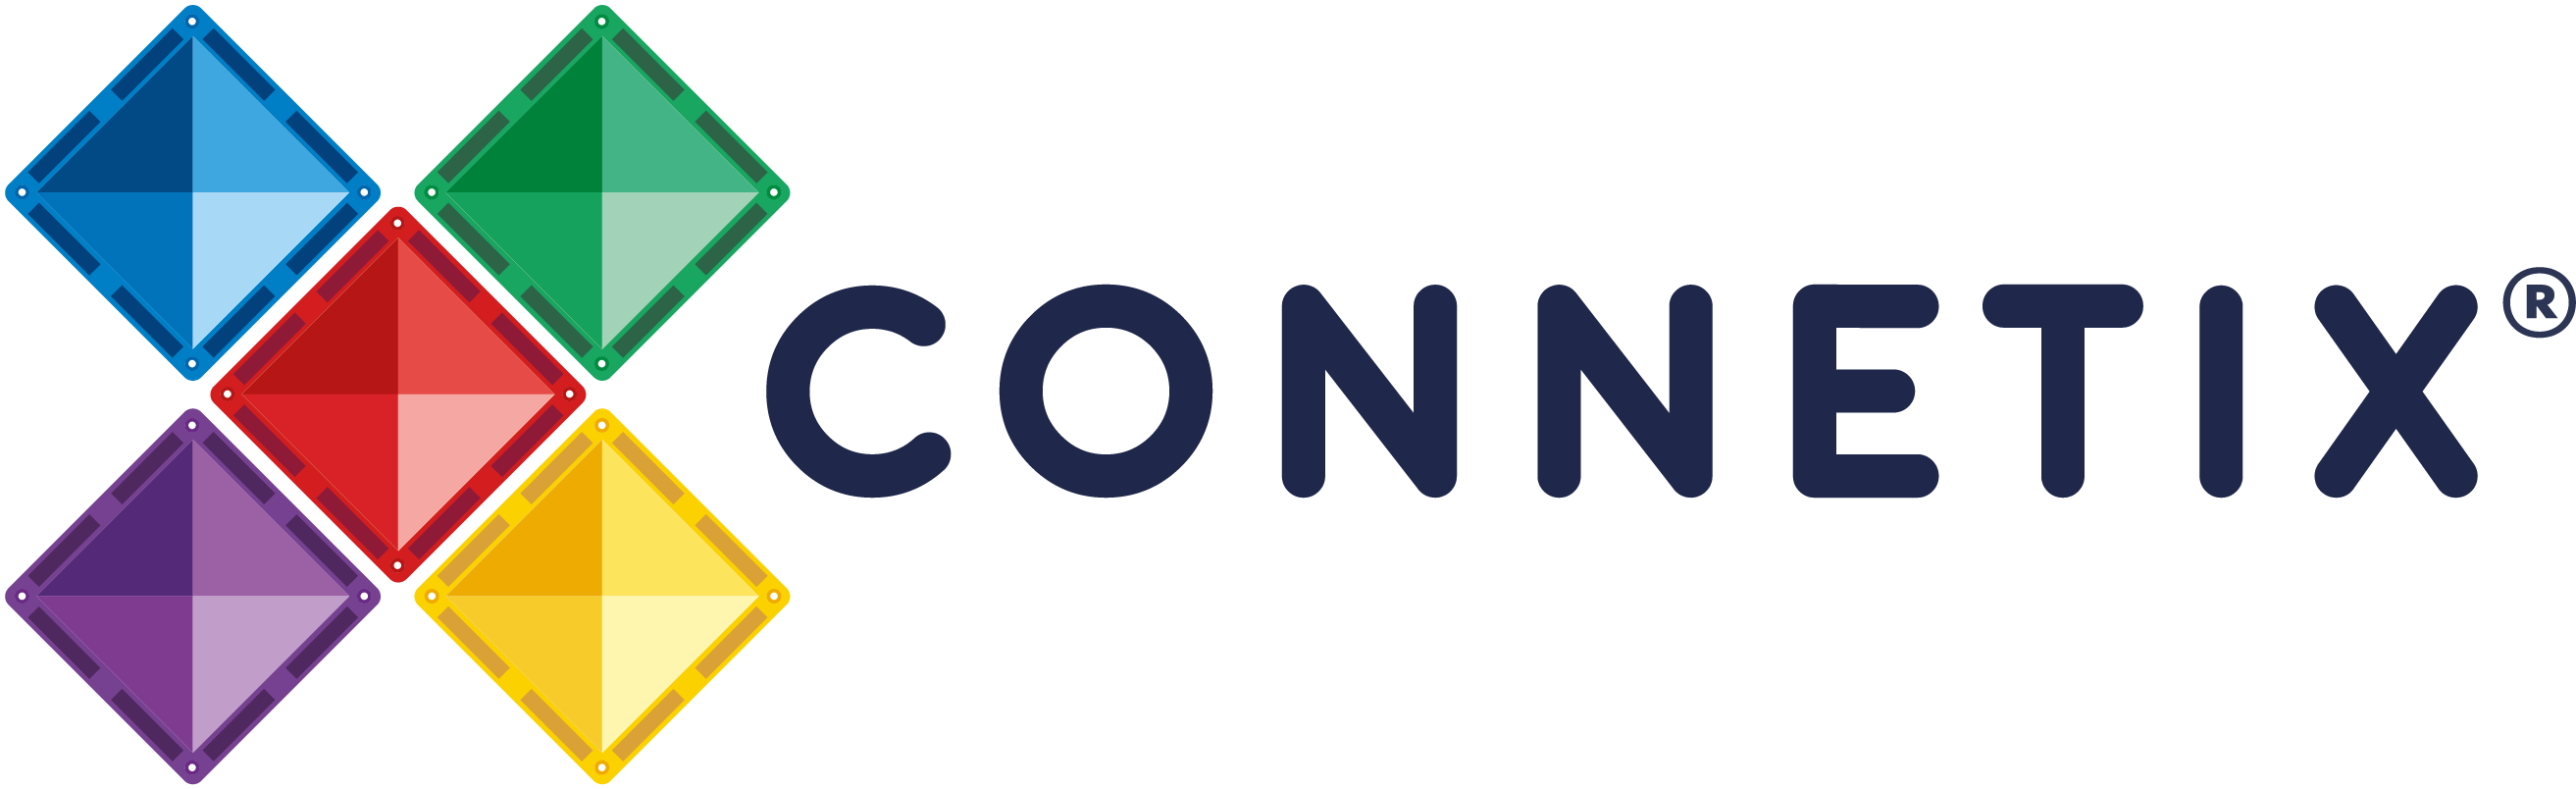 Connetix Main Logo - for web